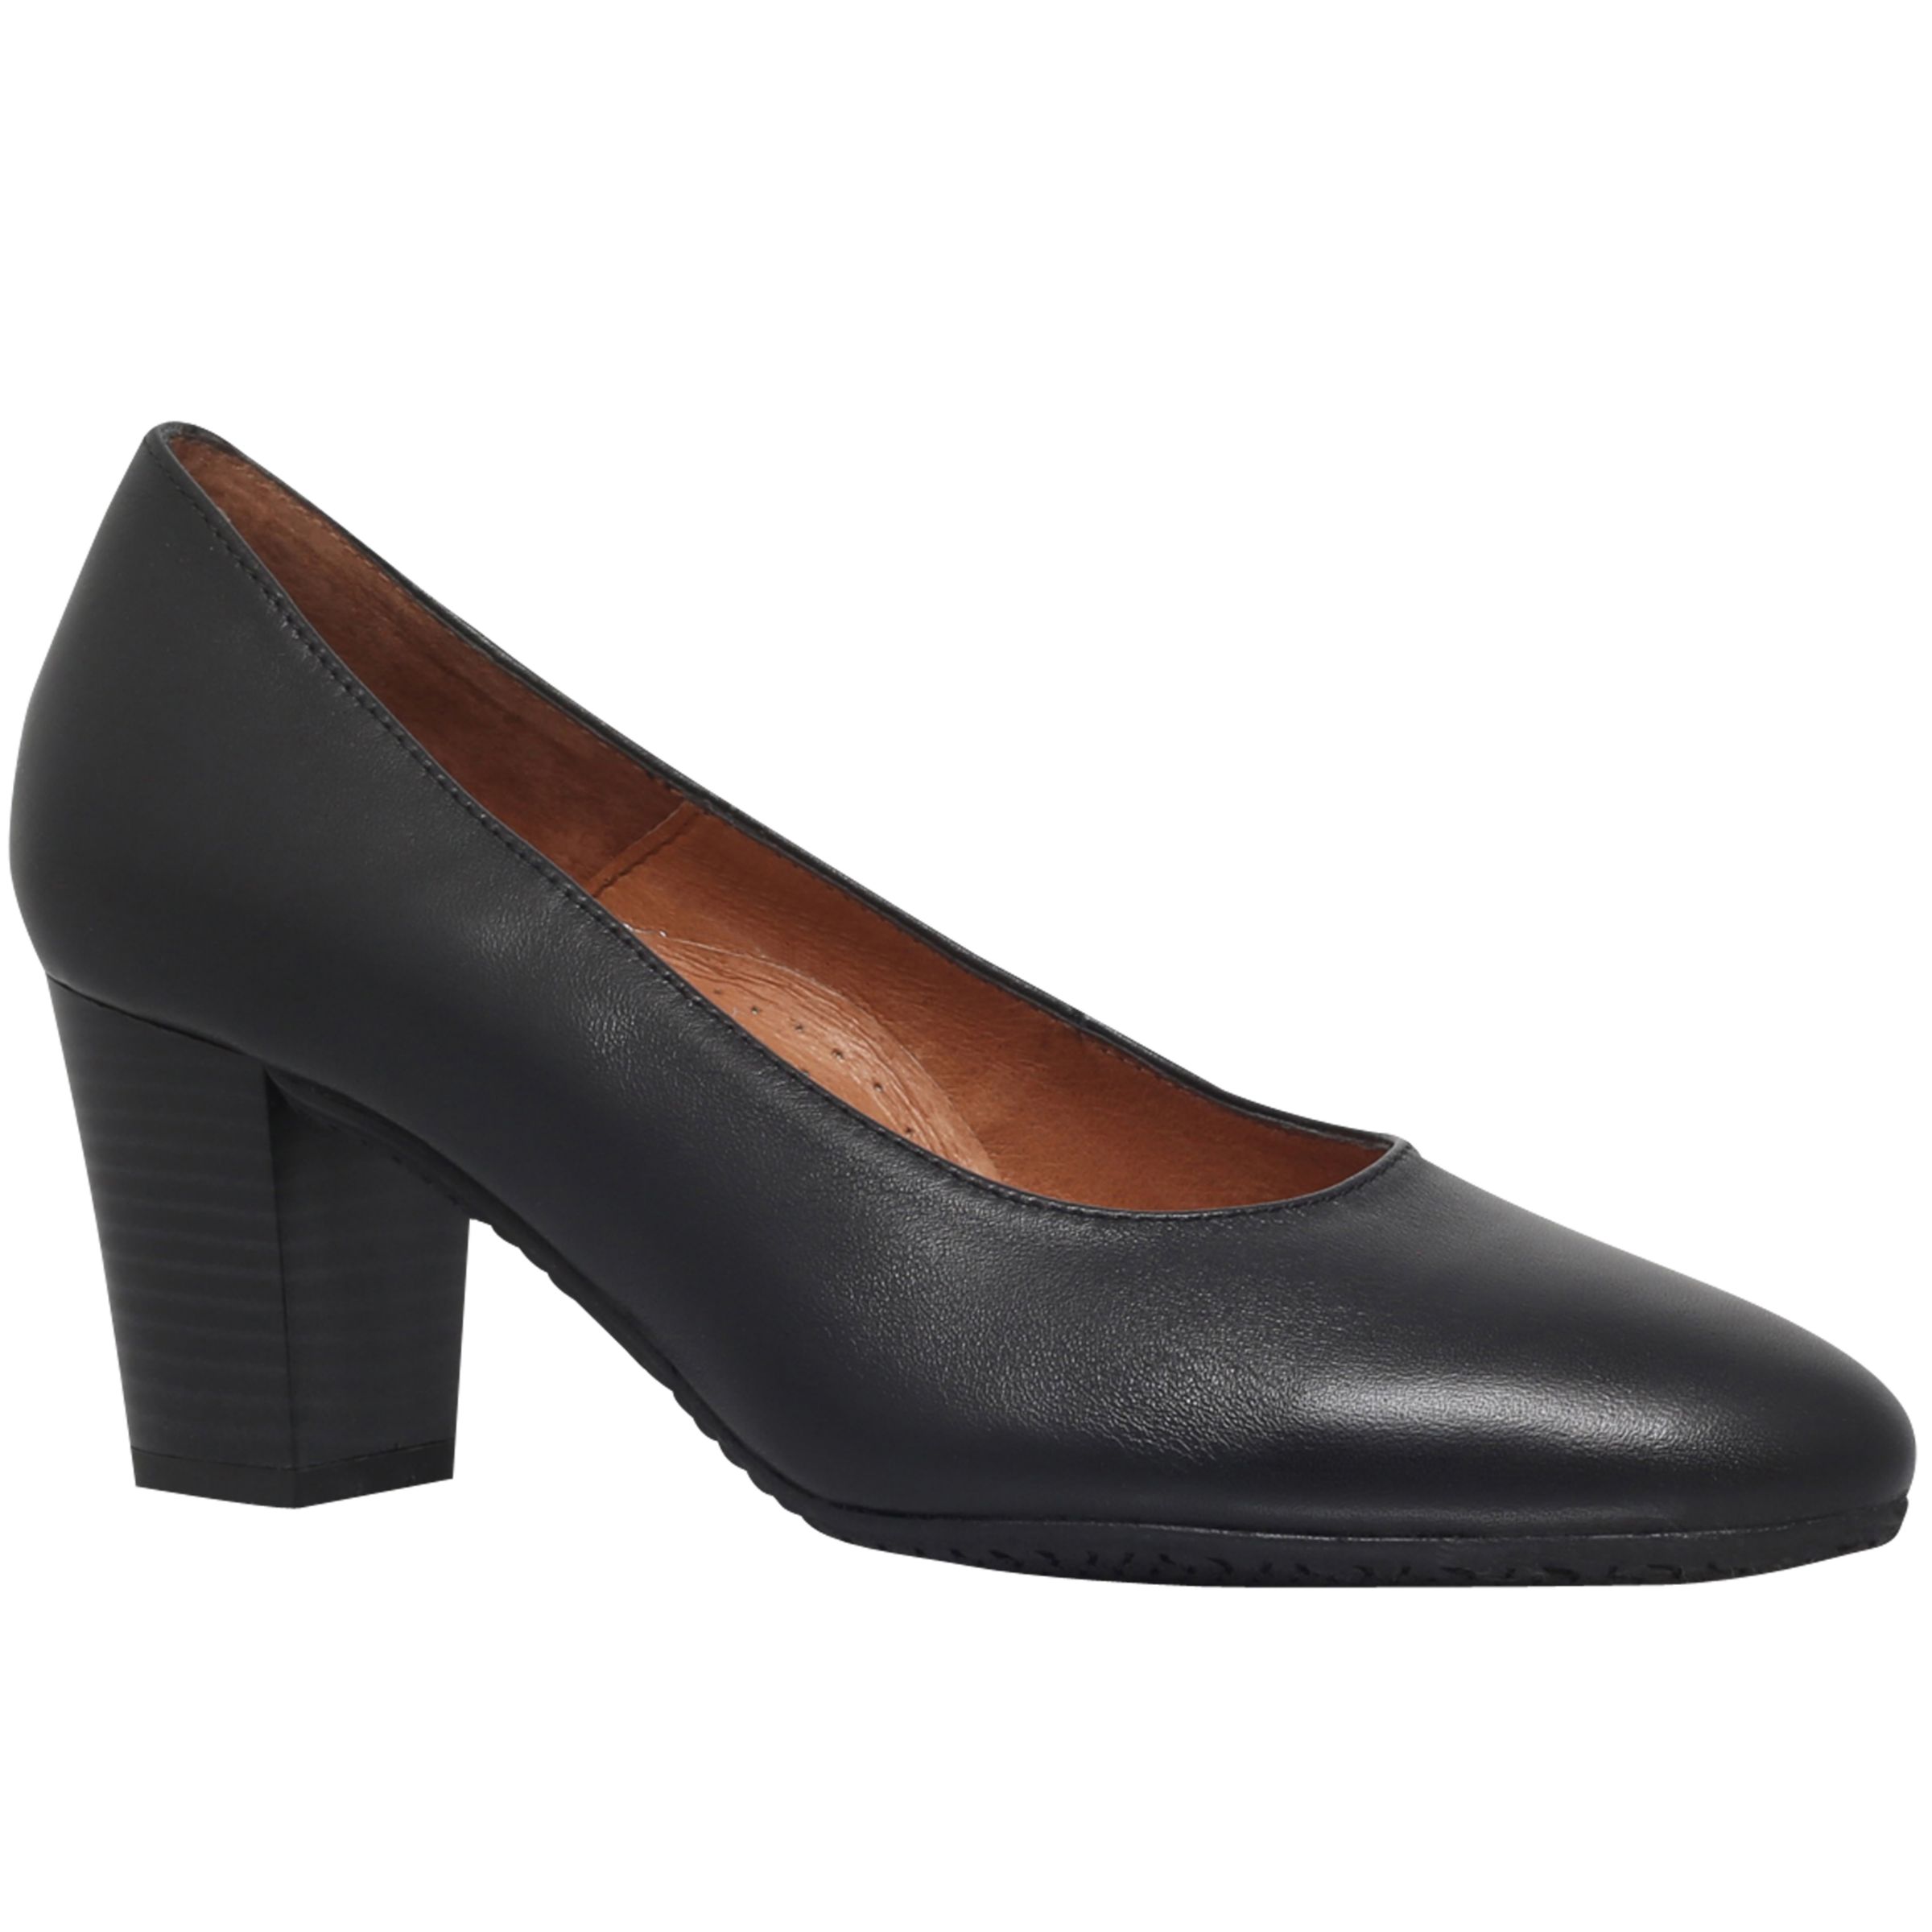 Carvela Comfort Air Block Heeled Court Shoes, Black, 7